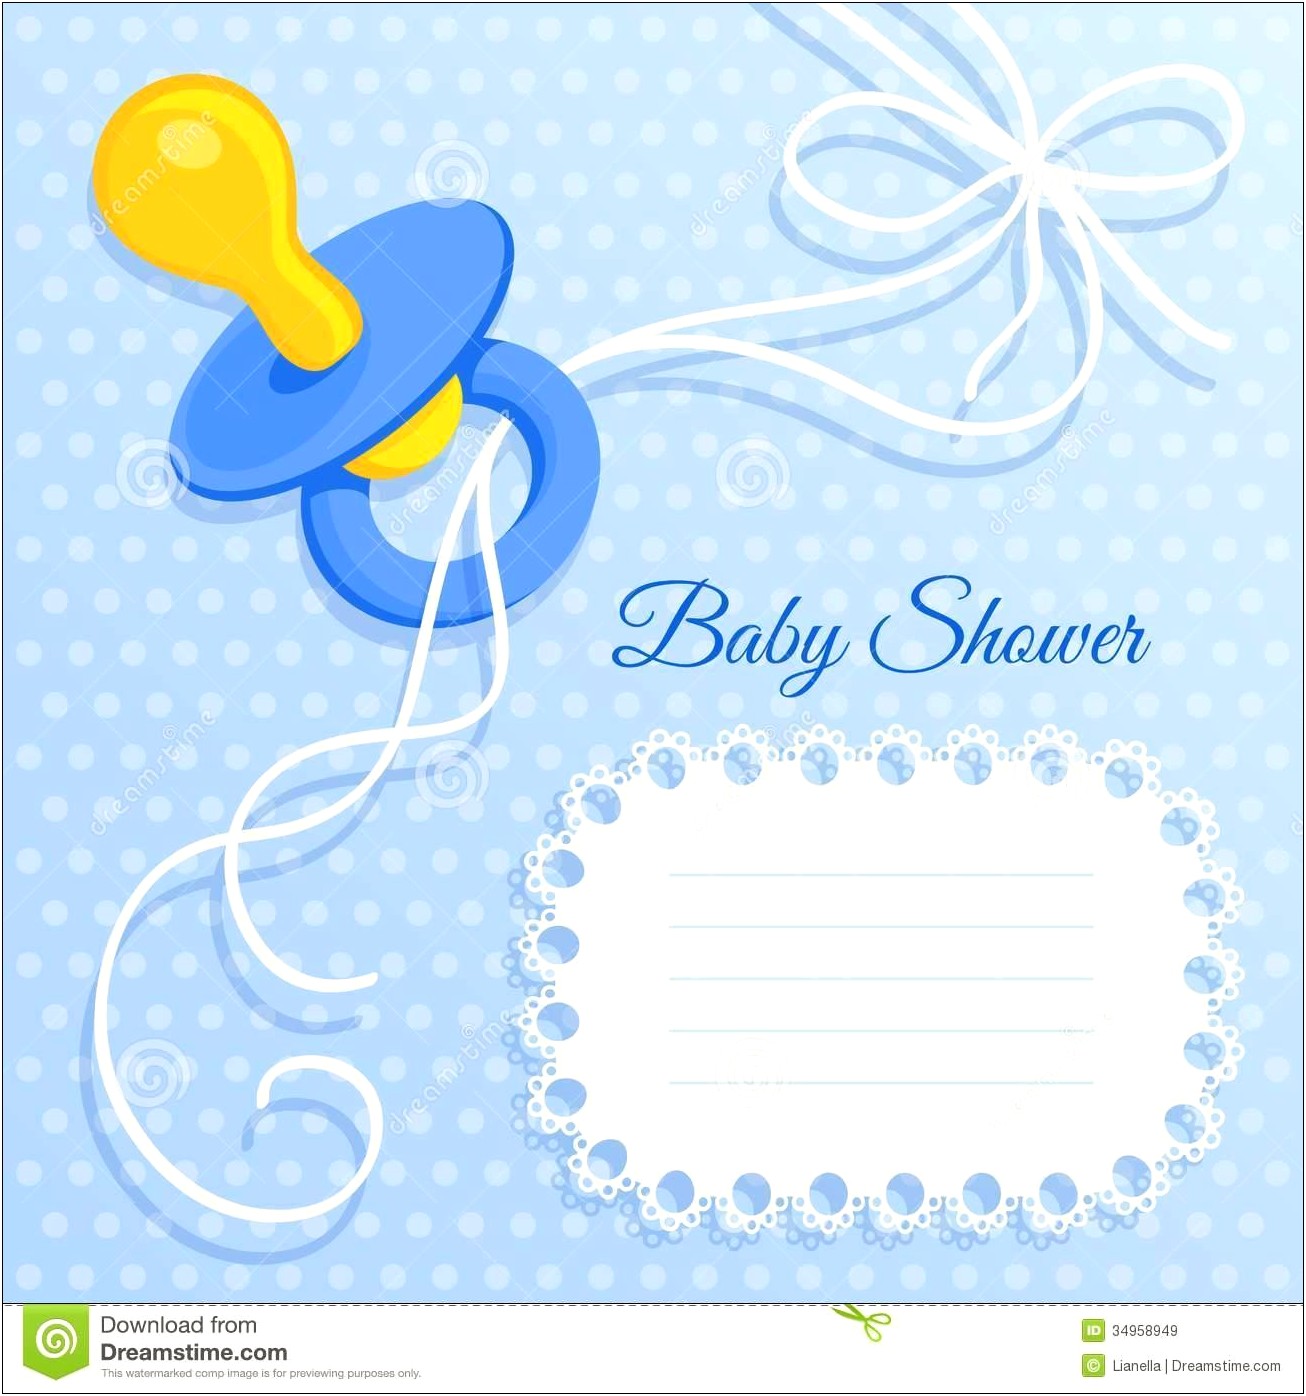 Diy Baby Shower Invitations Templates Free